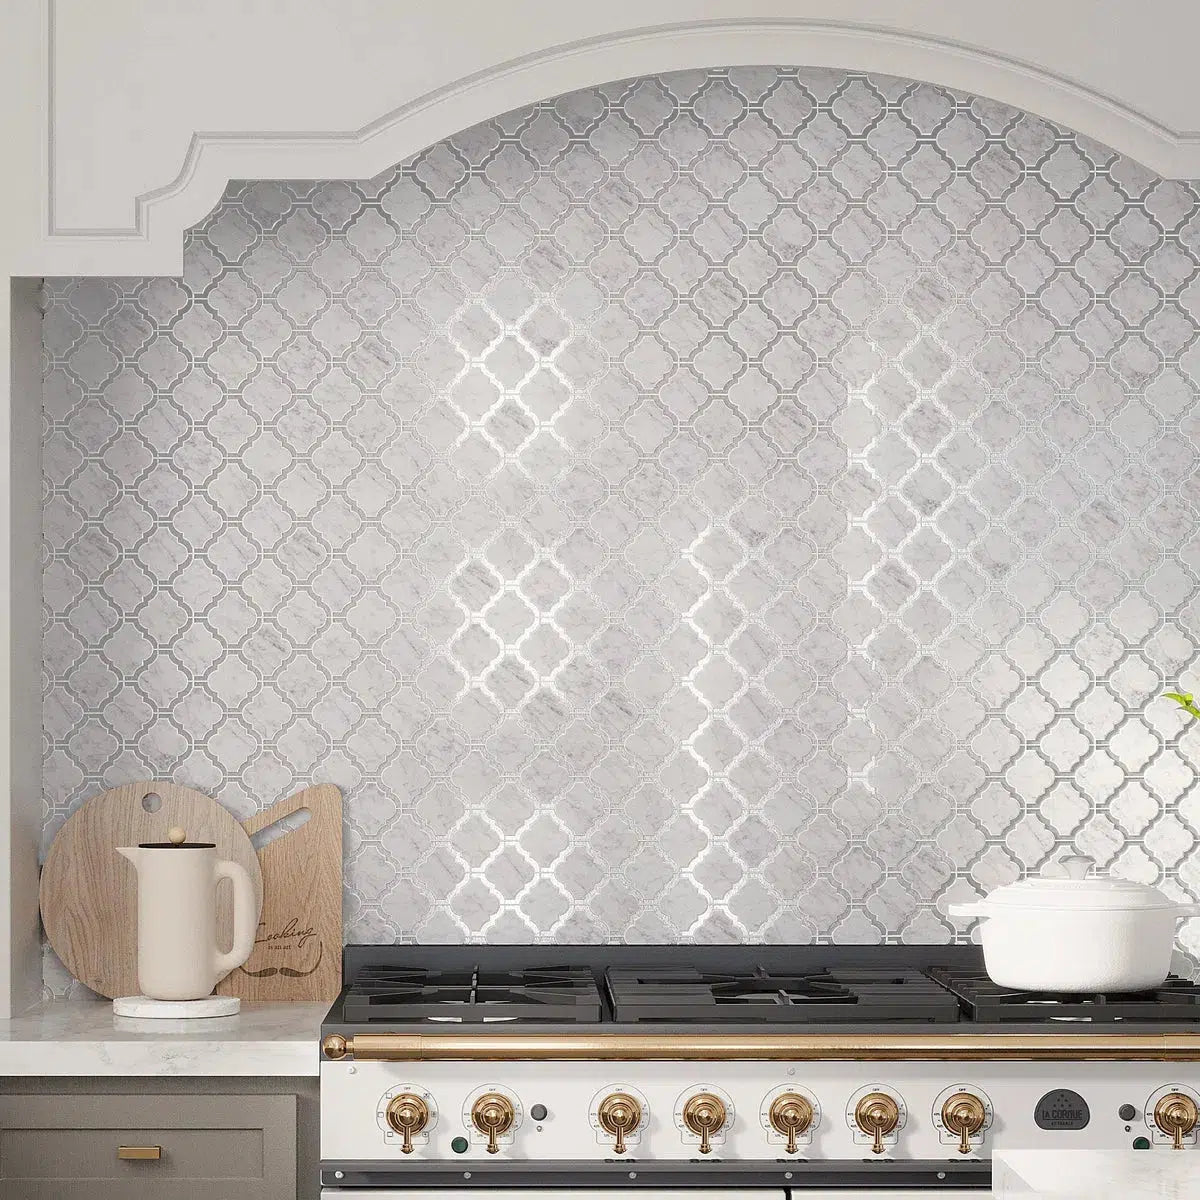 Lantern shaped marble tile kitchen backsplash